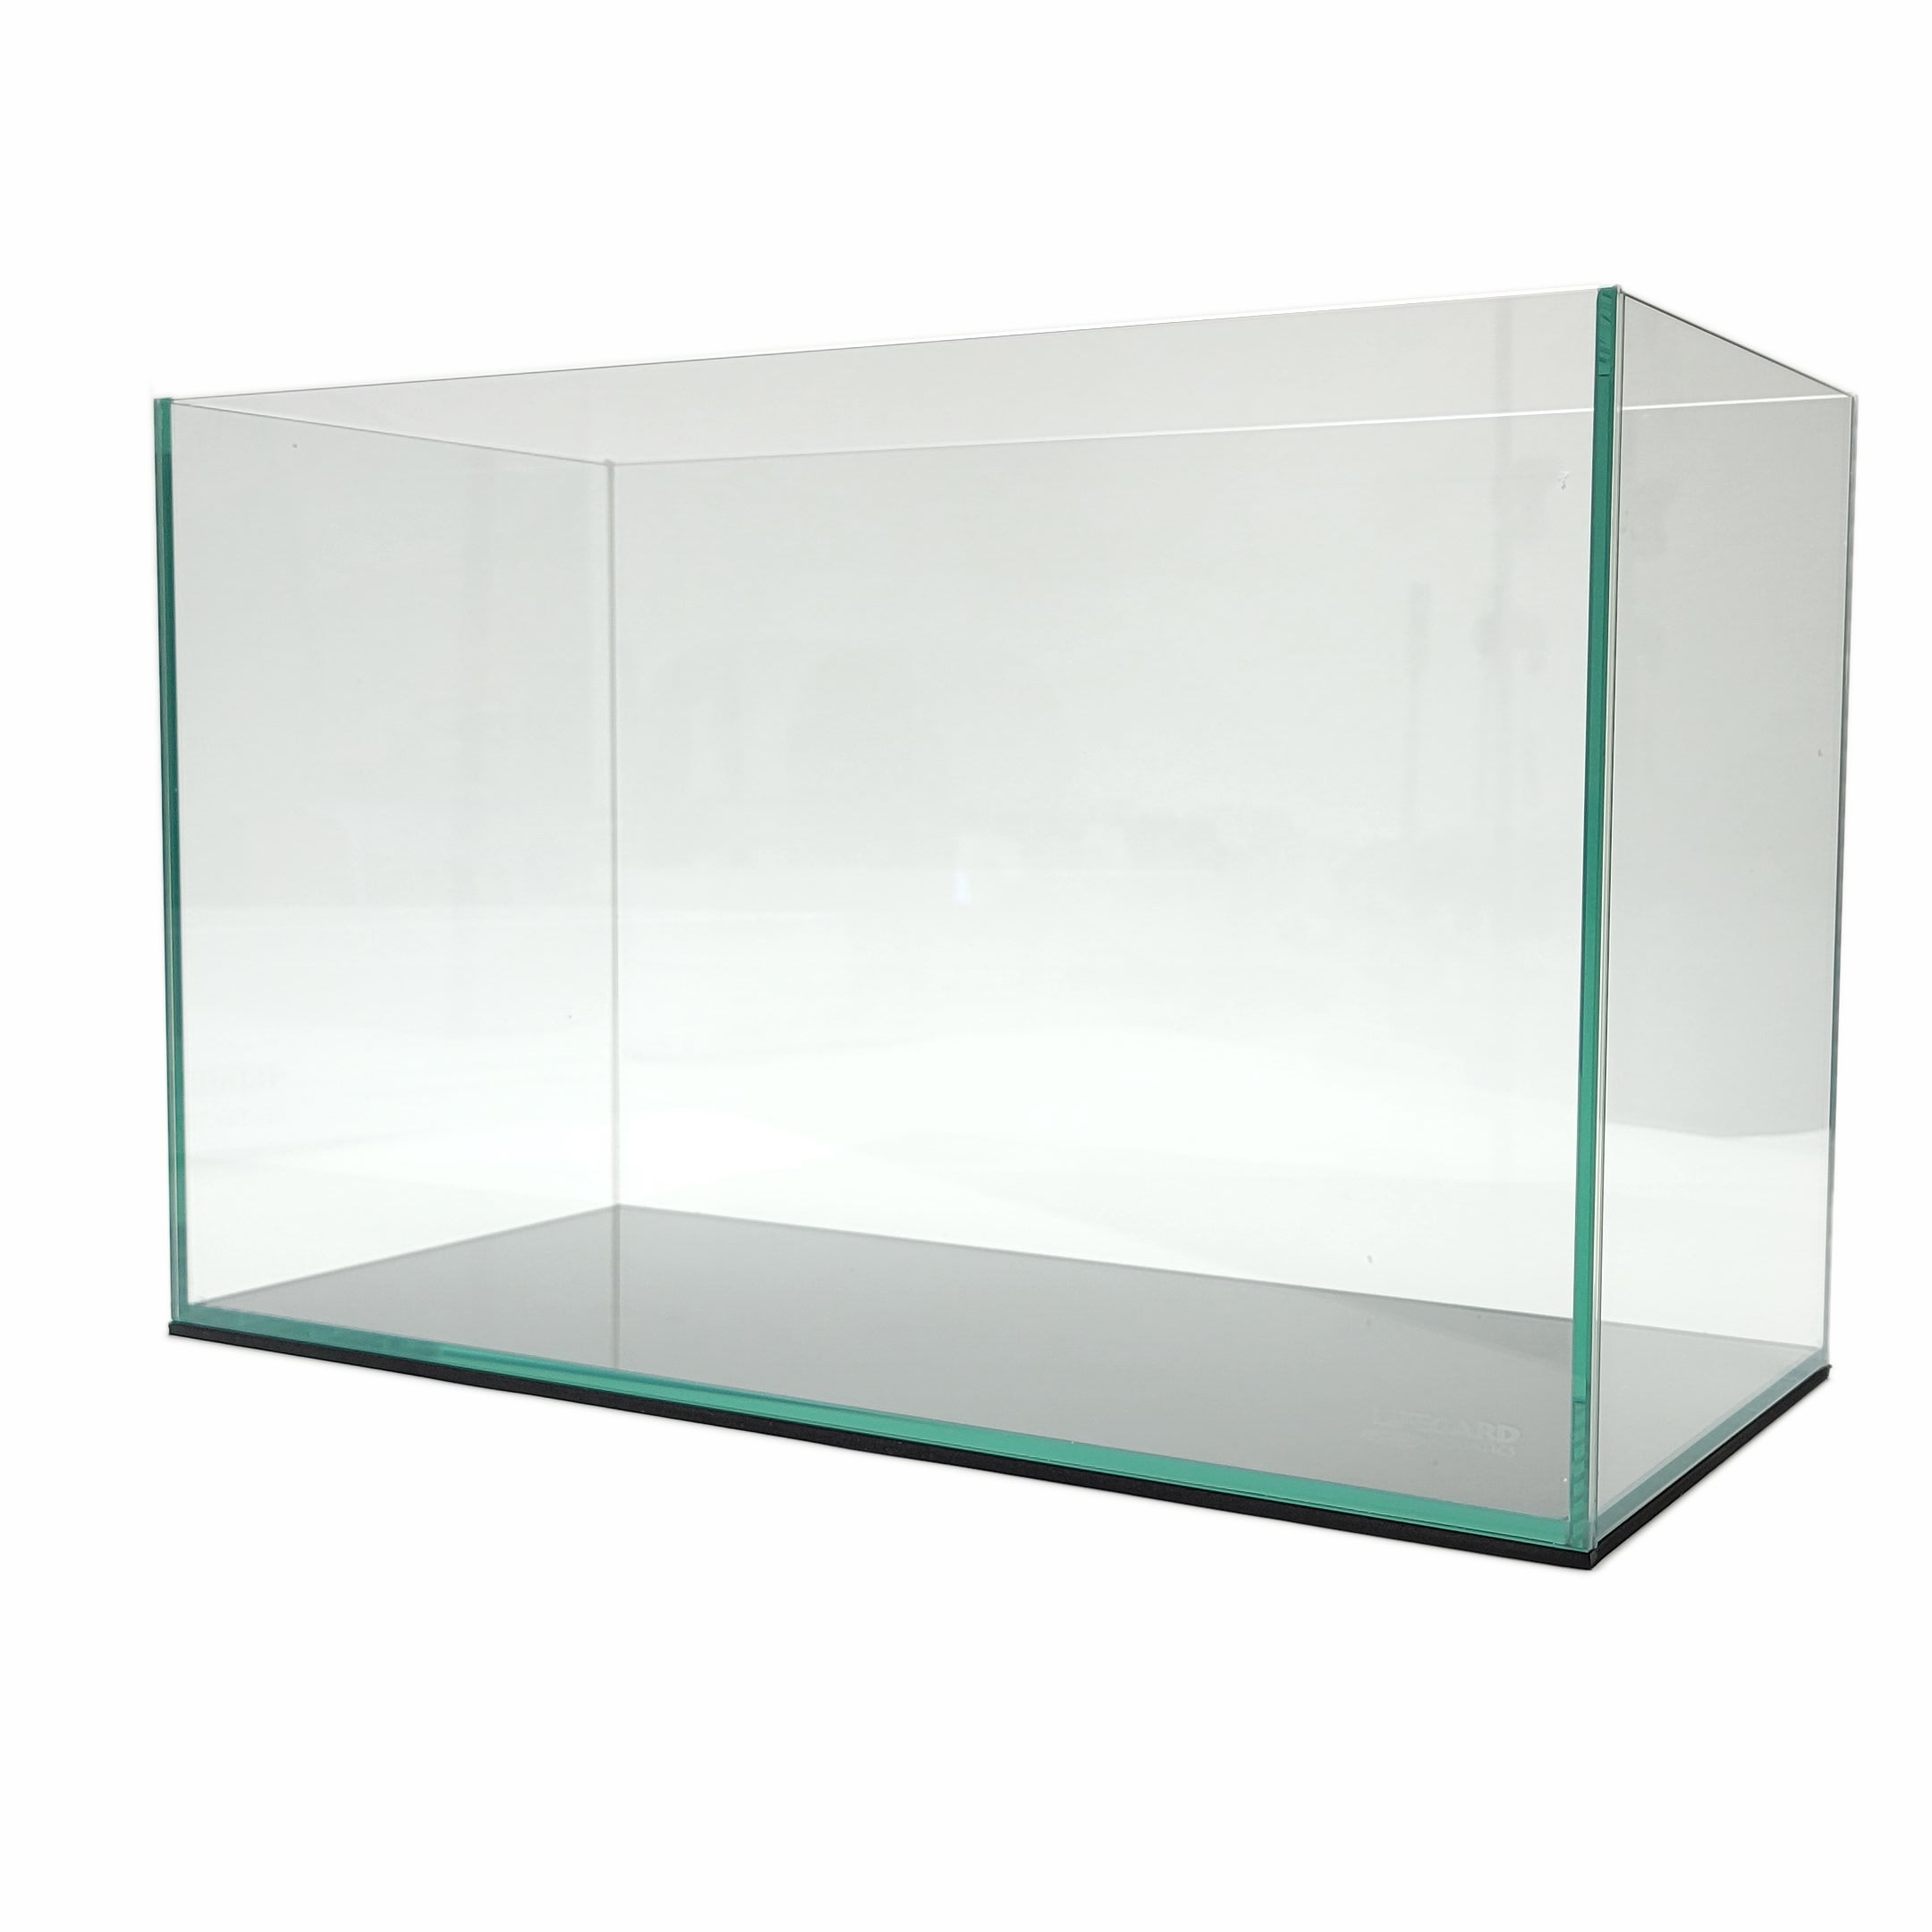 UNS Rimless Shallow Glass Aquarium Tank